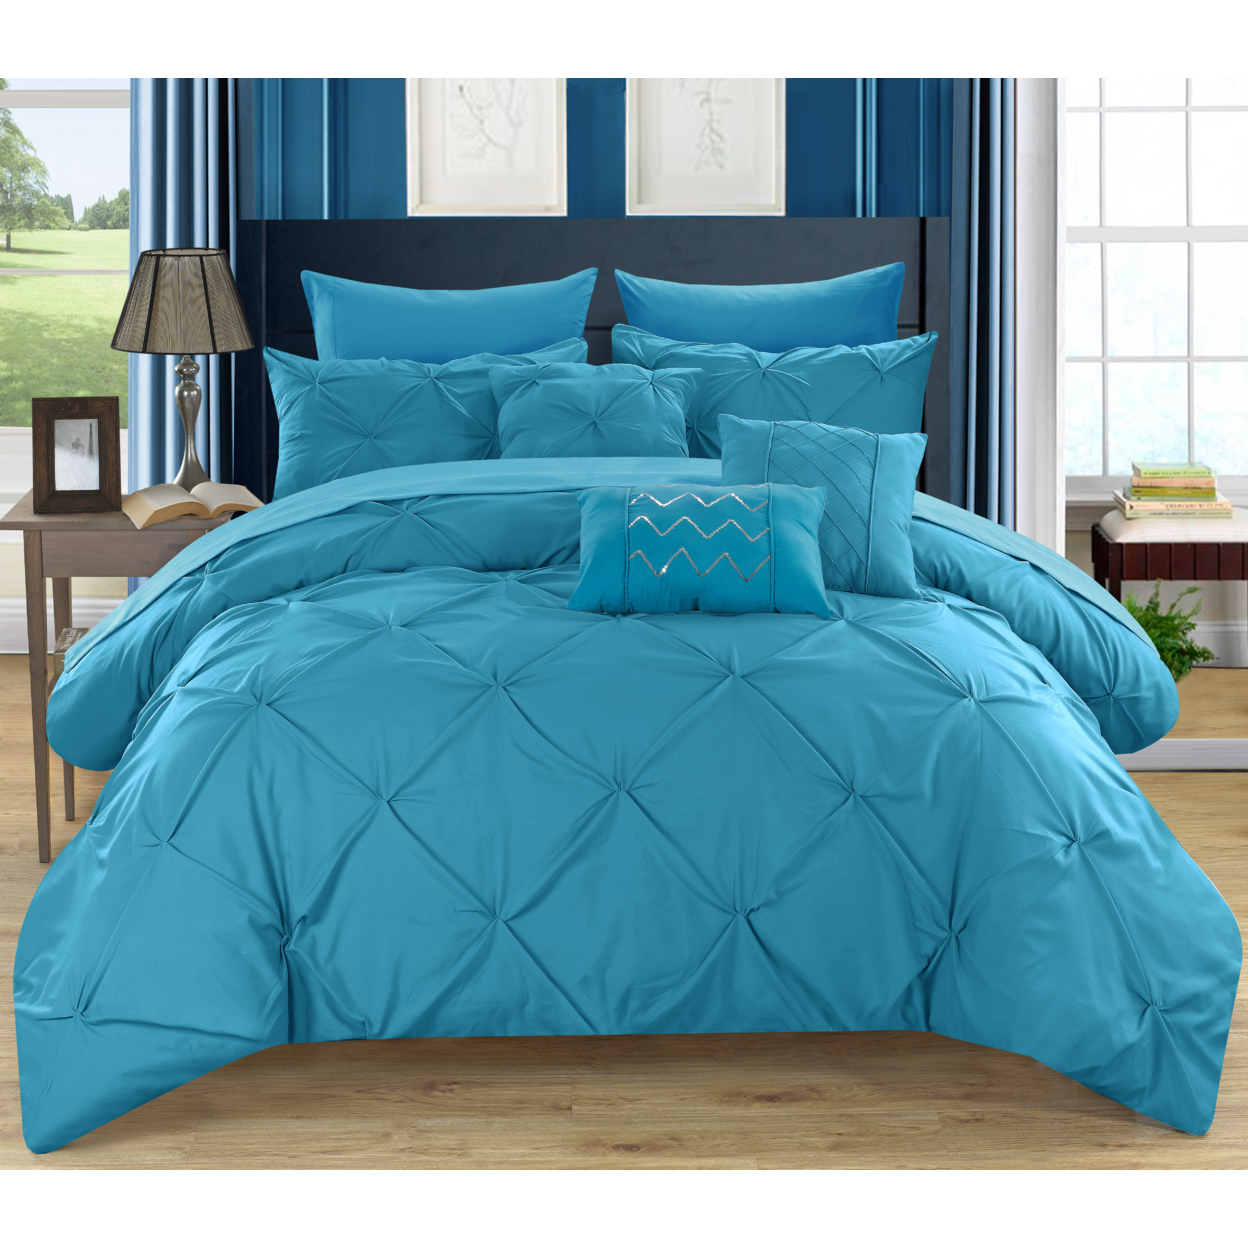 Alvatore Pinch Pleated Bed In A Bag Comforter Set - Blue, Queen